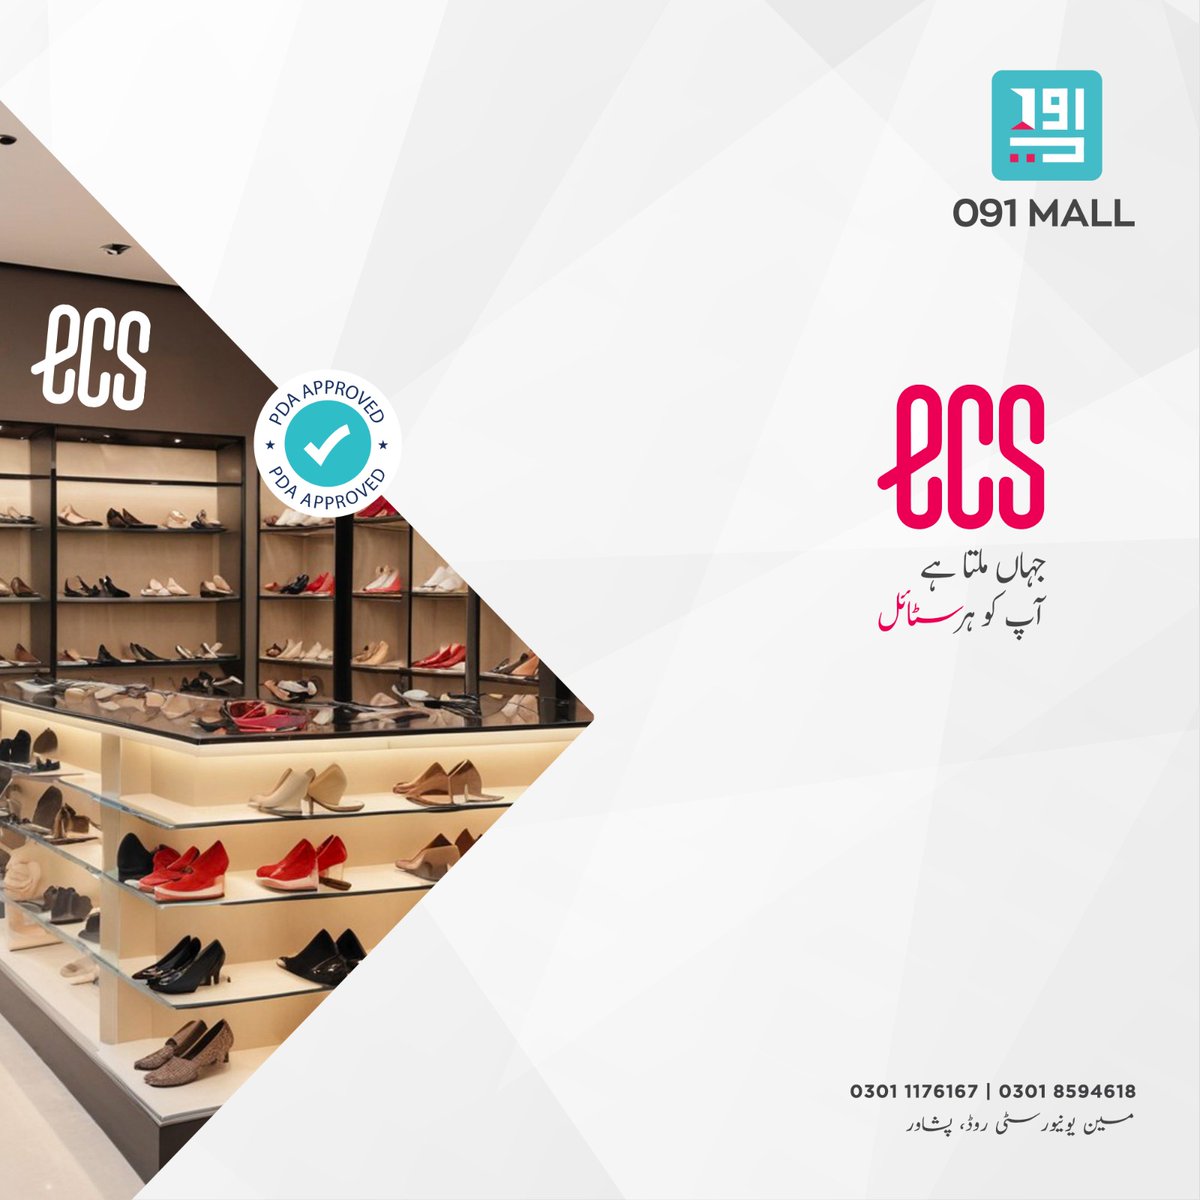 ECS  پاکستان کا مشہور فٹ وئیر برانڈ
اب ہے حصہ پشاور  کے لگژری شاپنگ ہب  091 مال کا ۔ تو  اب آپ کے ہر ایونٹ کے کو یادگار بنانے کے لیے  ملے گا سٹائل کا ہر نیا انداز

☎️ 0301-1176167 l 0301-8594618
#091Mall #ShoppingMall #UniversityRoadPeshawar #peshawar #KPK